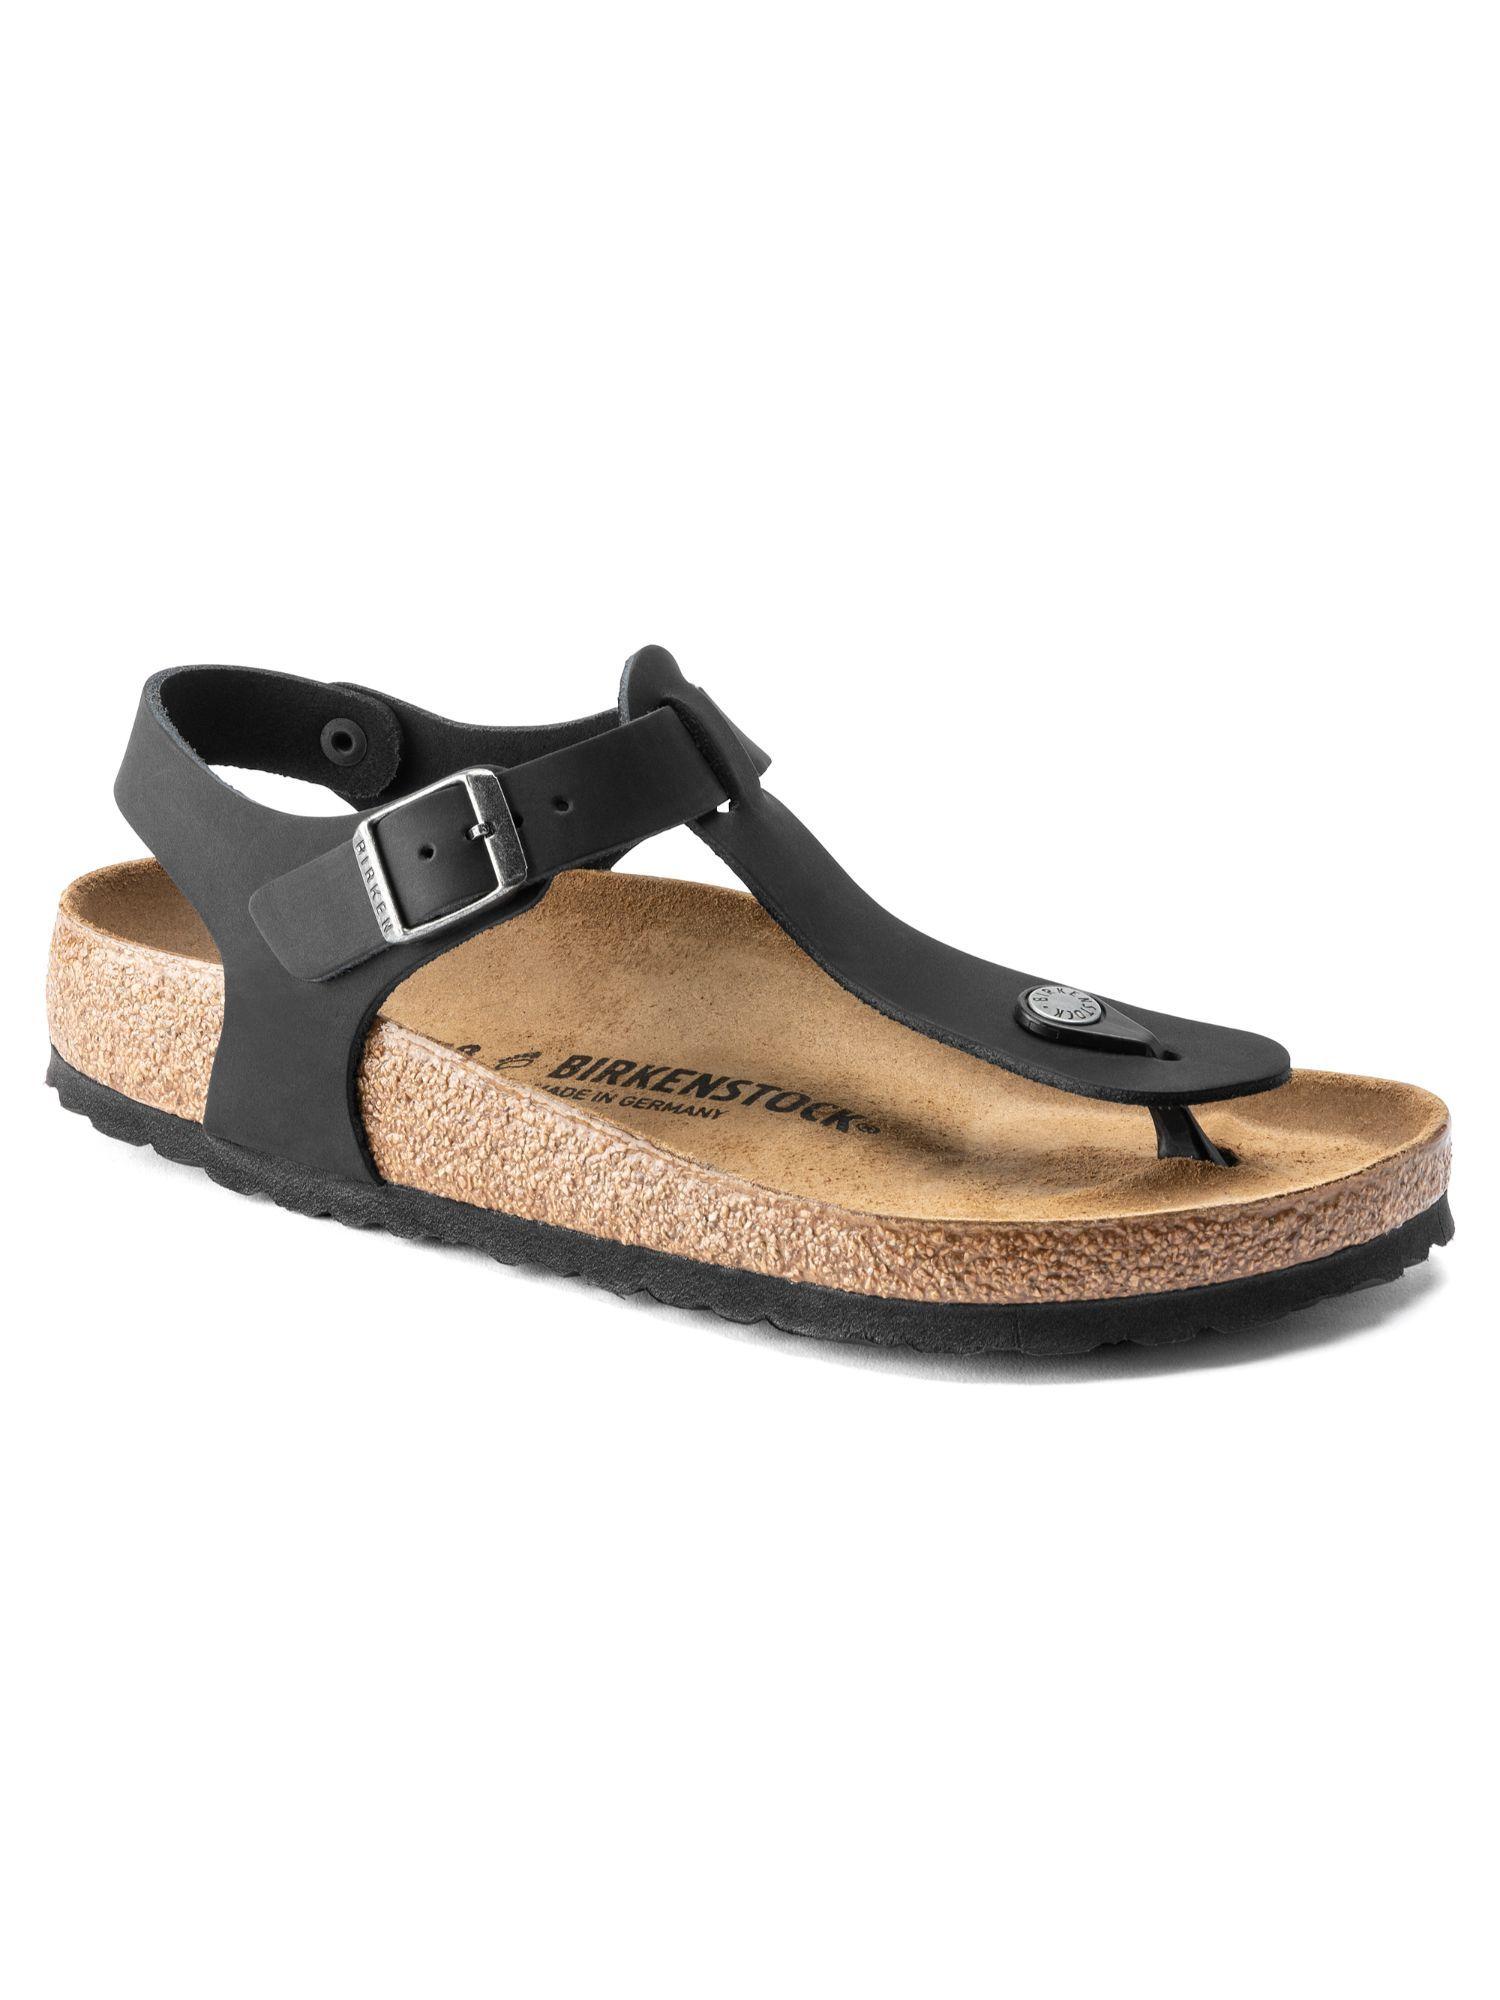 Kairo Black Regular Width Unisex Sandals With An Ankle Strap